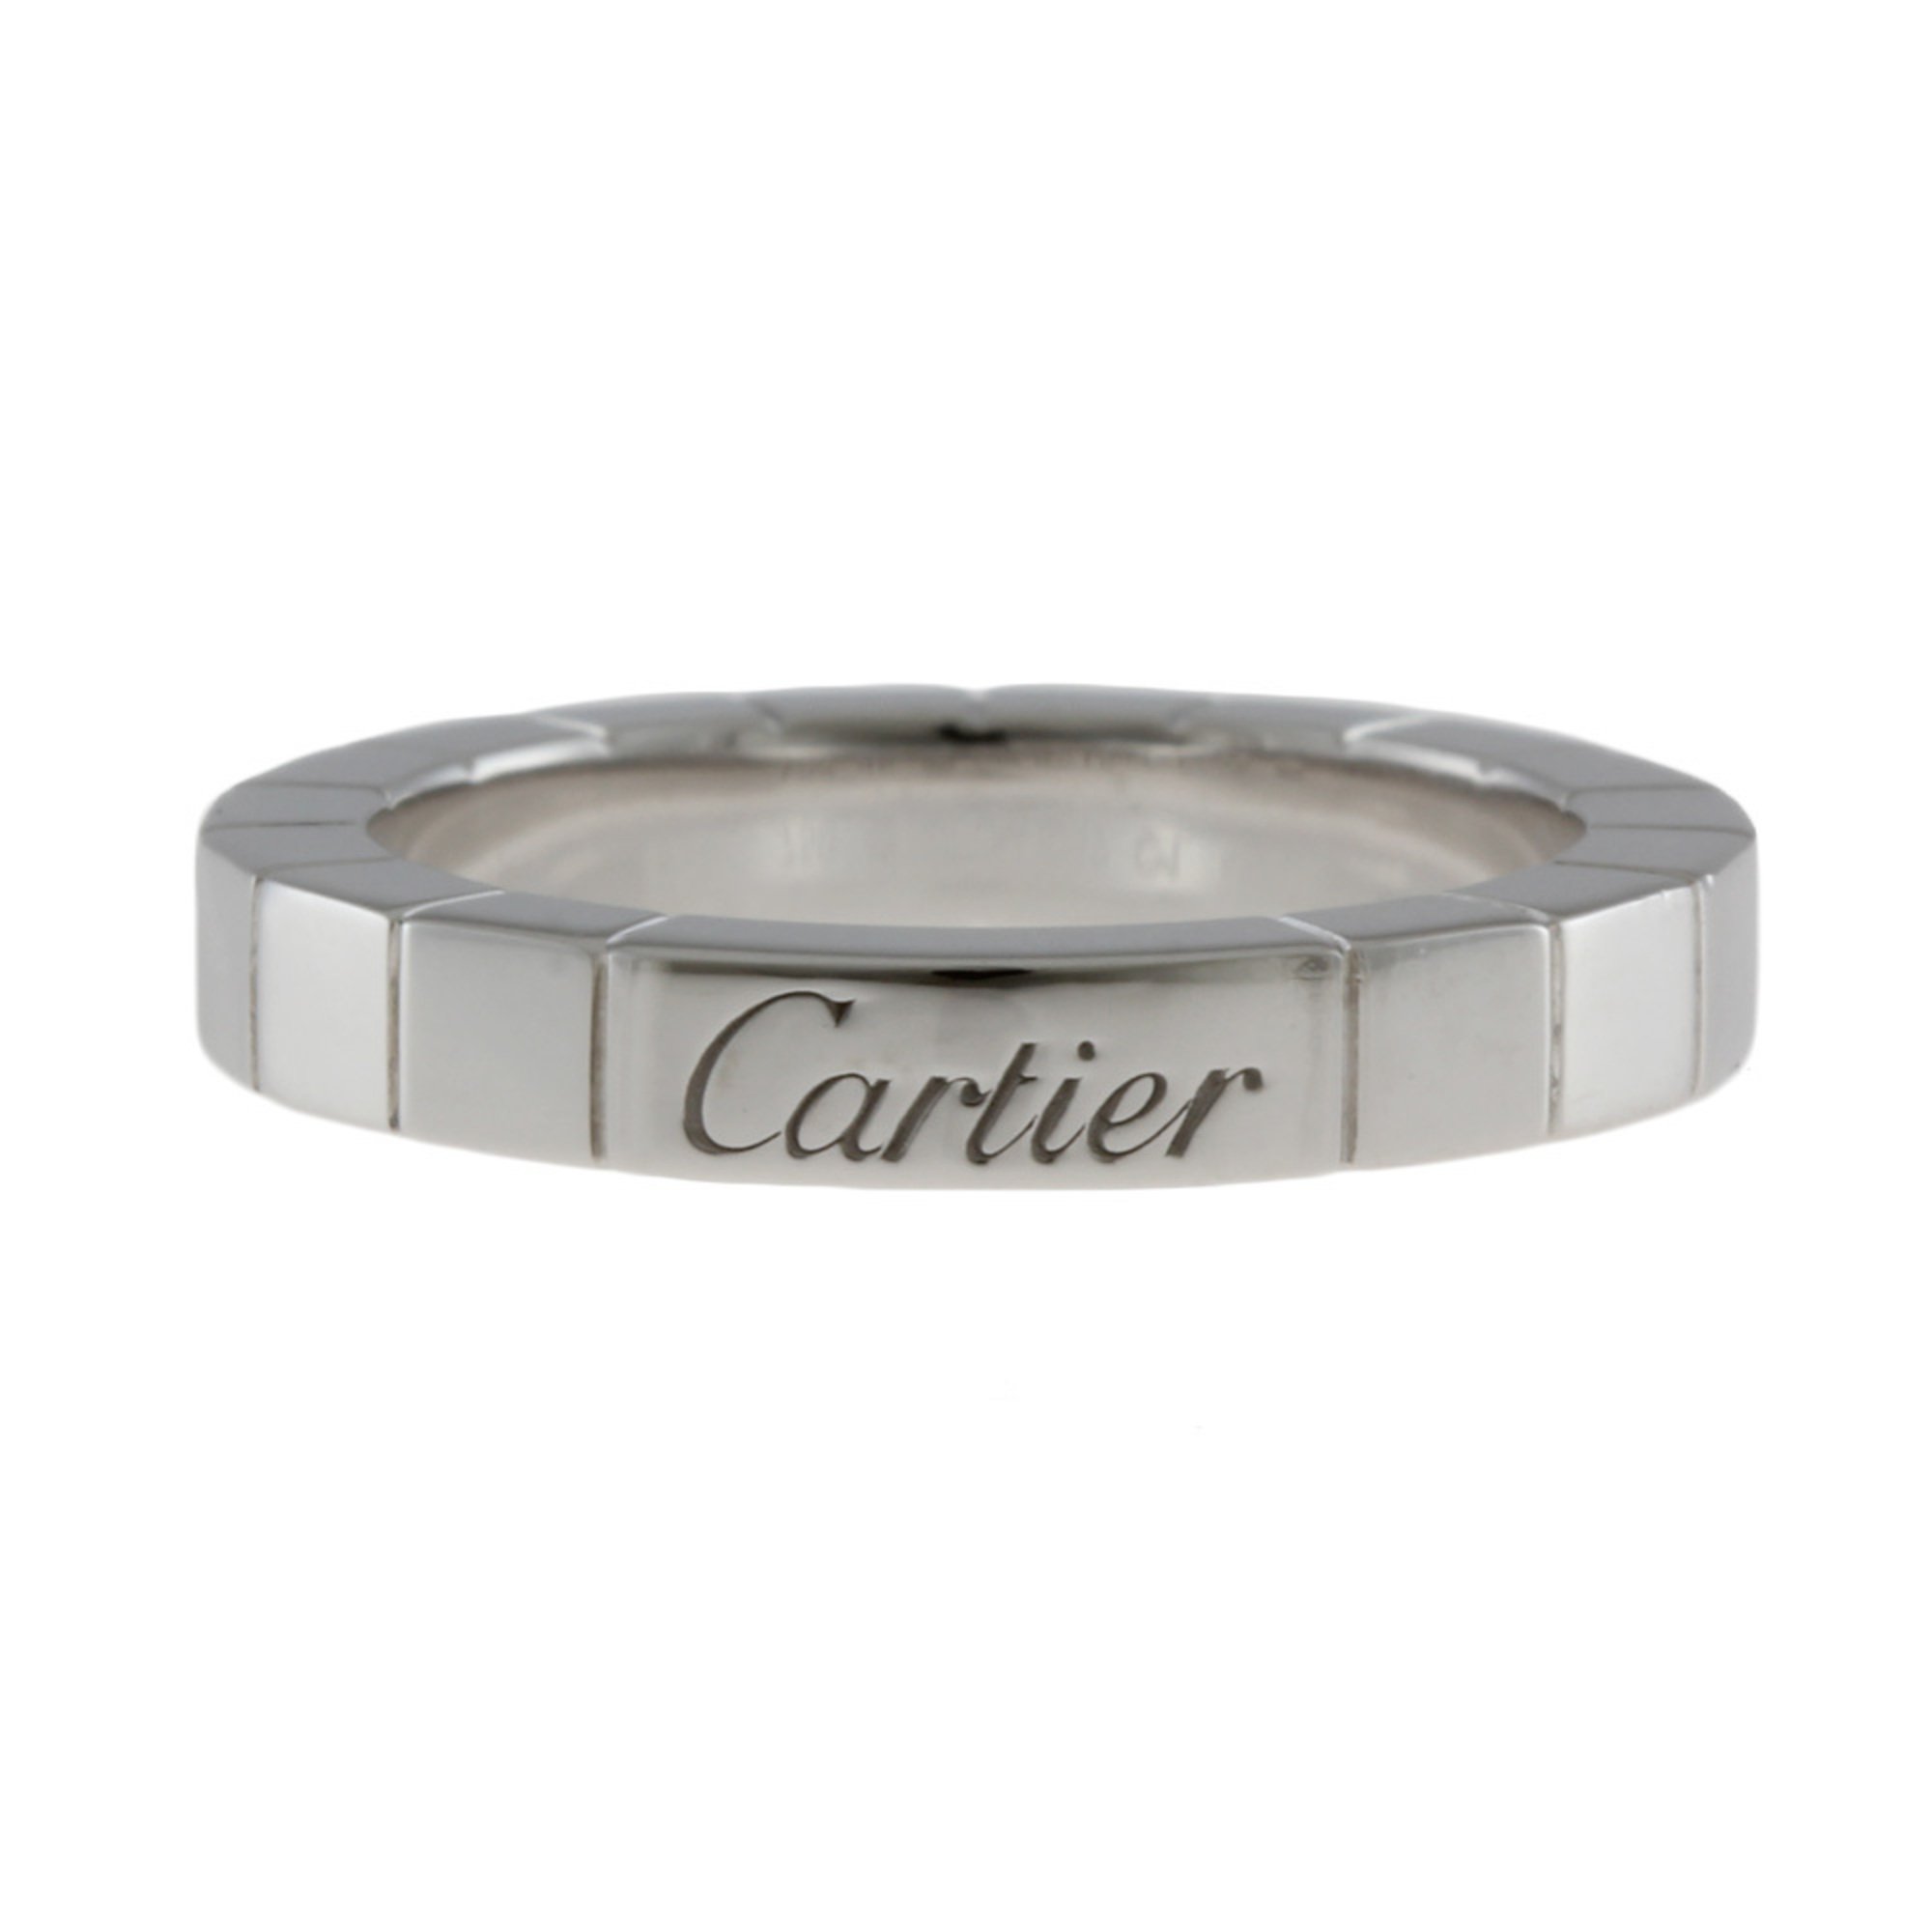 Cartier CARTIER Laniere #48 Ring No. 8 18K K18 White Gold Women's